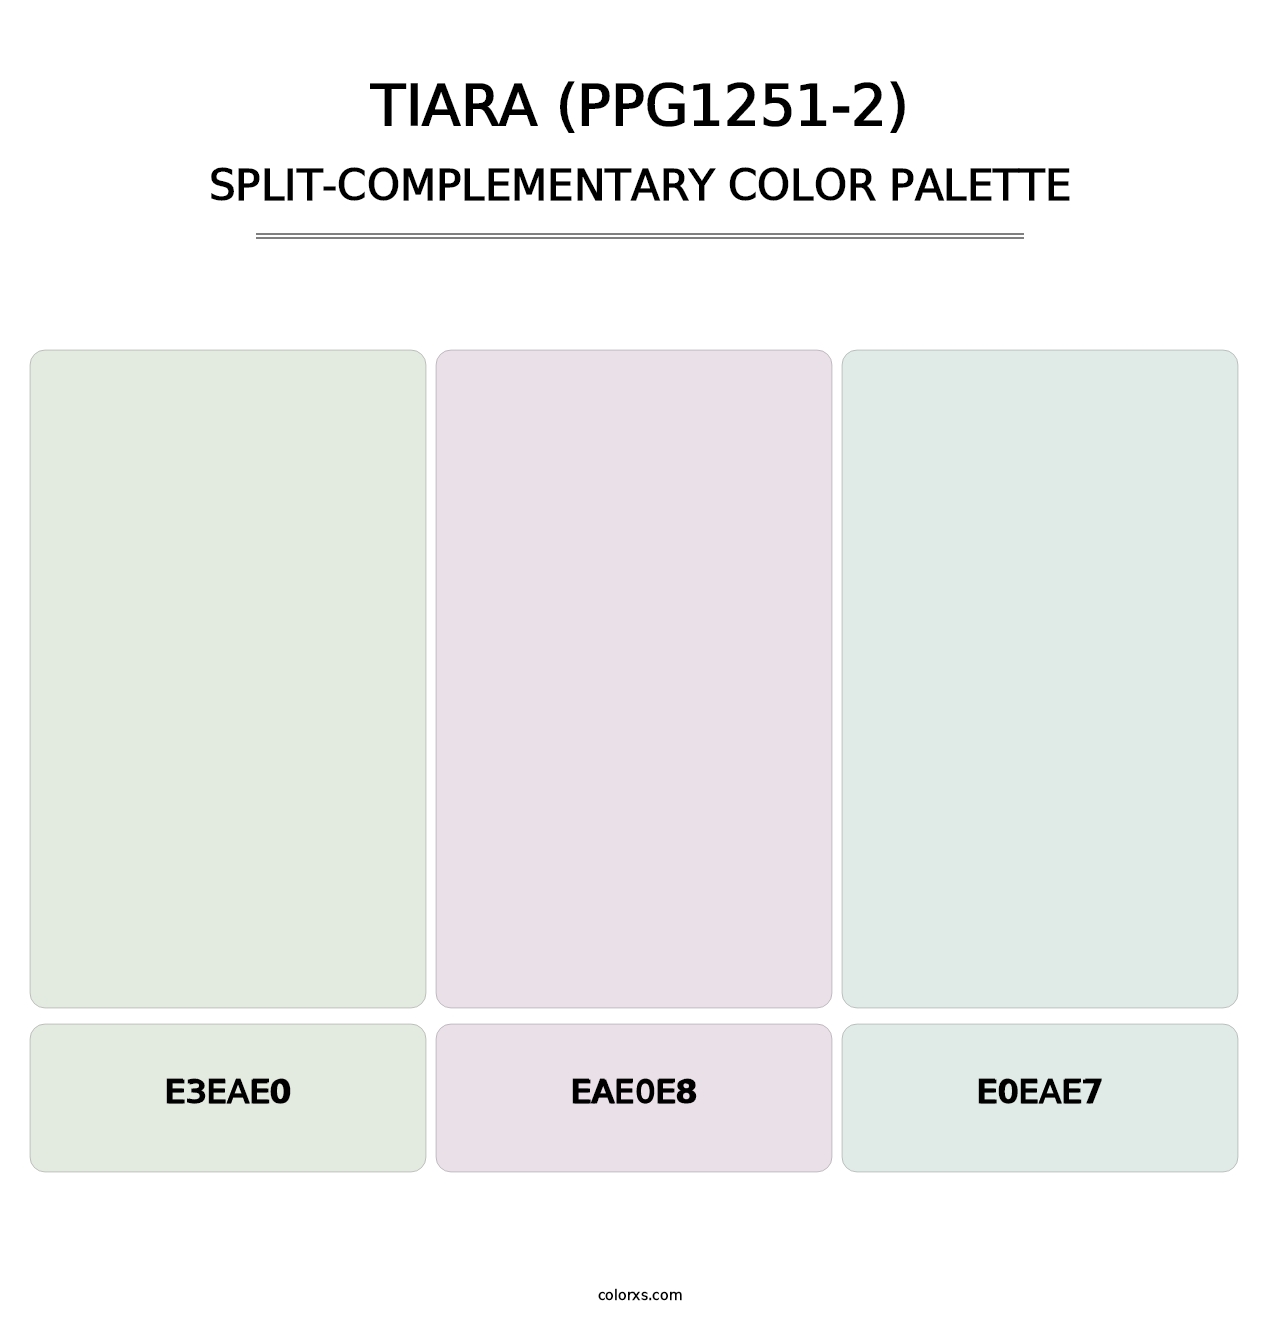 Tiara (PPG1251-2) - Split-Complementary Color Palette